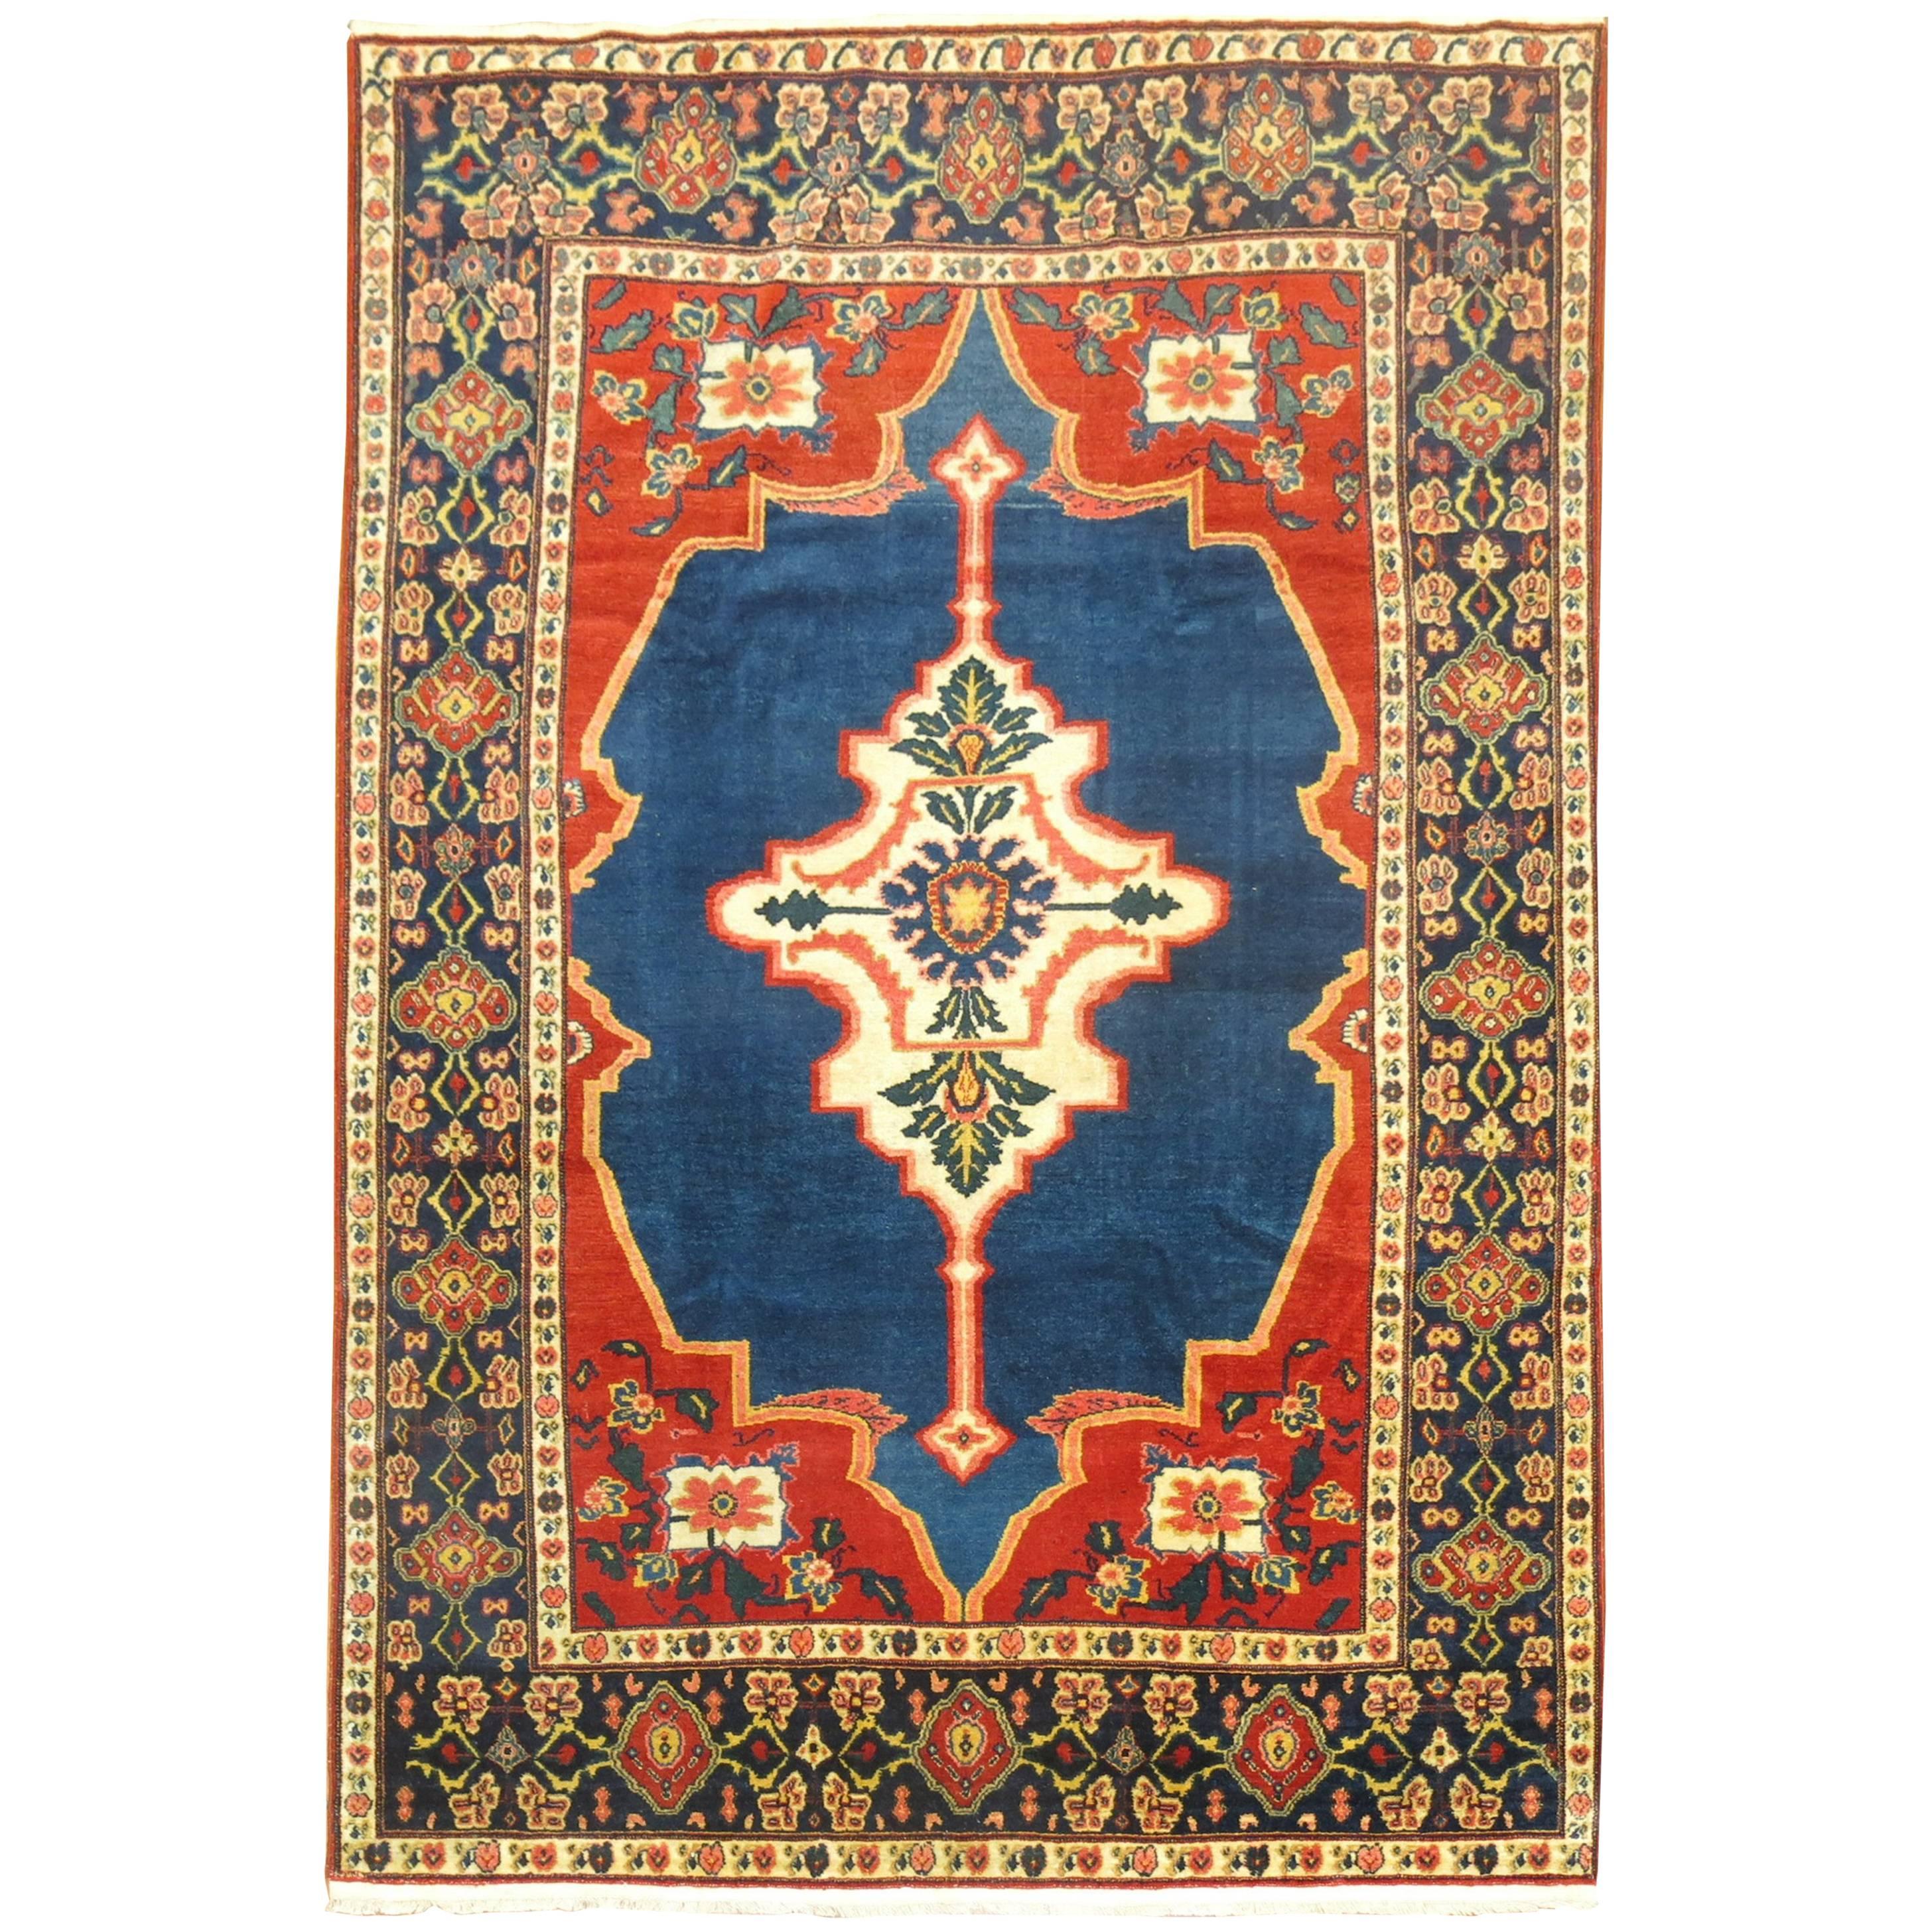 Jewel Toned Antique Persian Senneh Rug